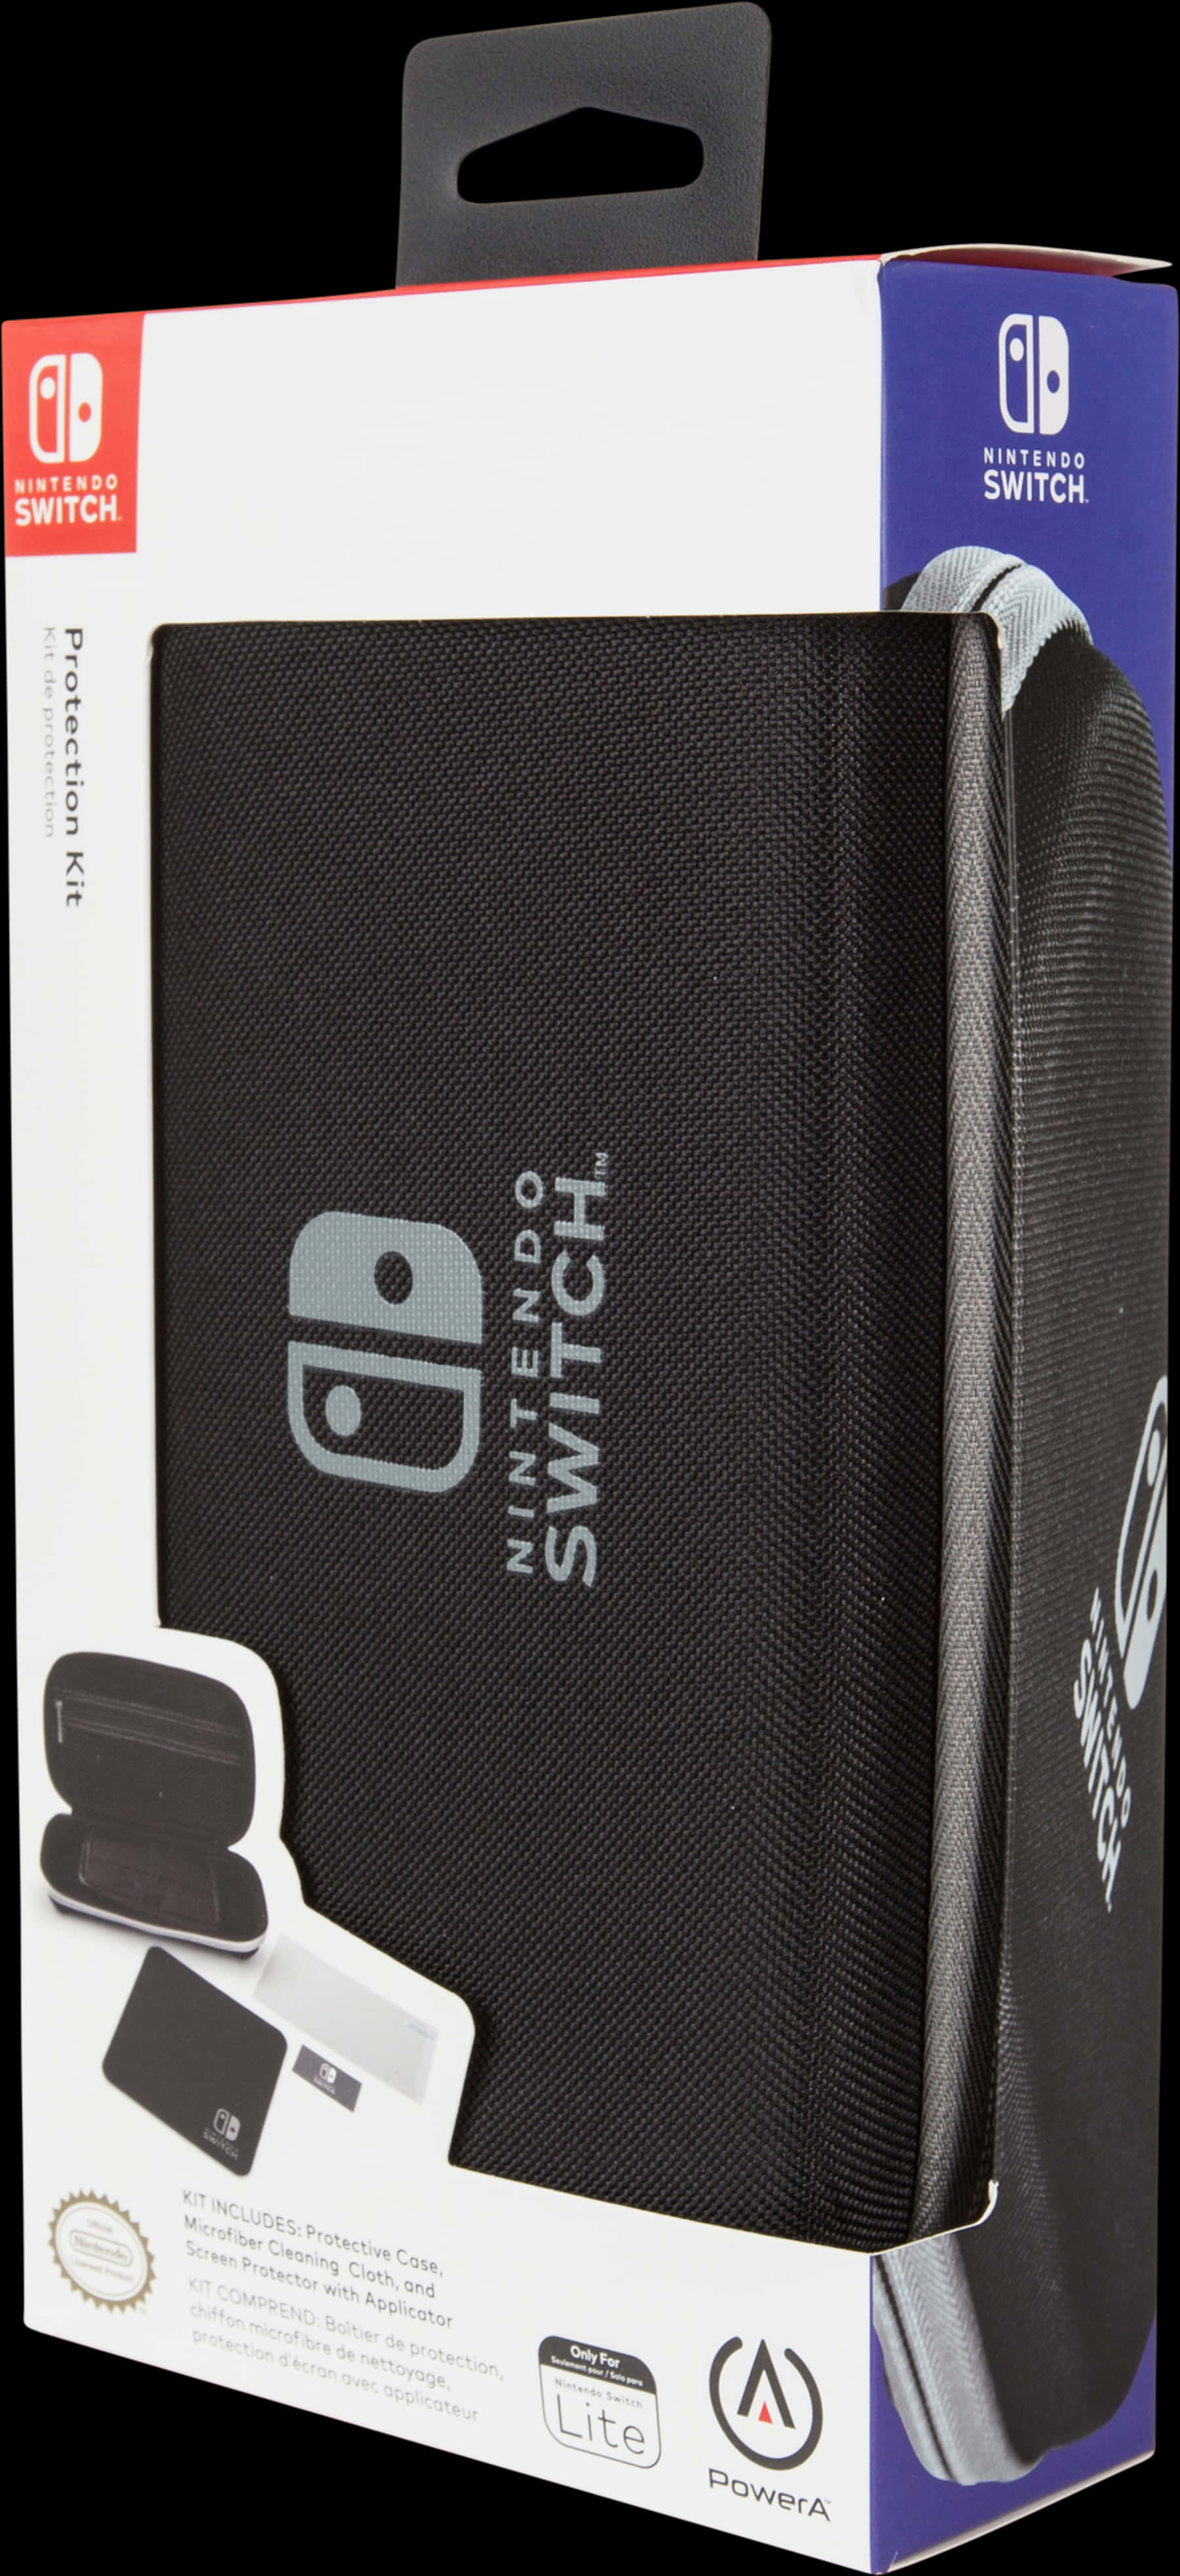 A Black Box With A Logo